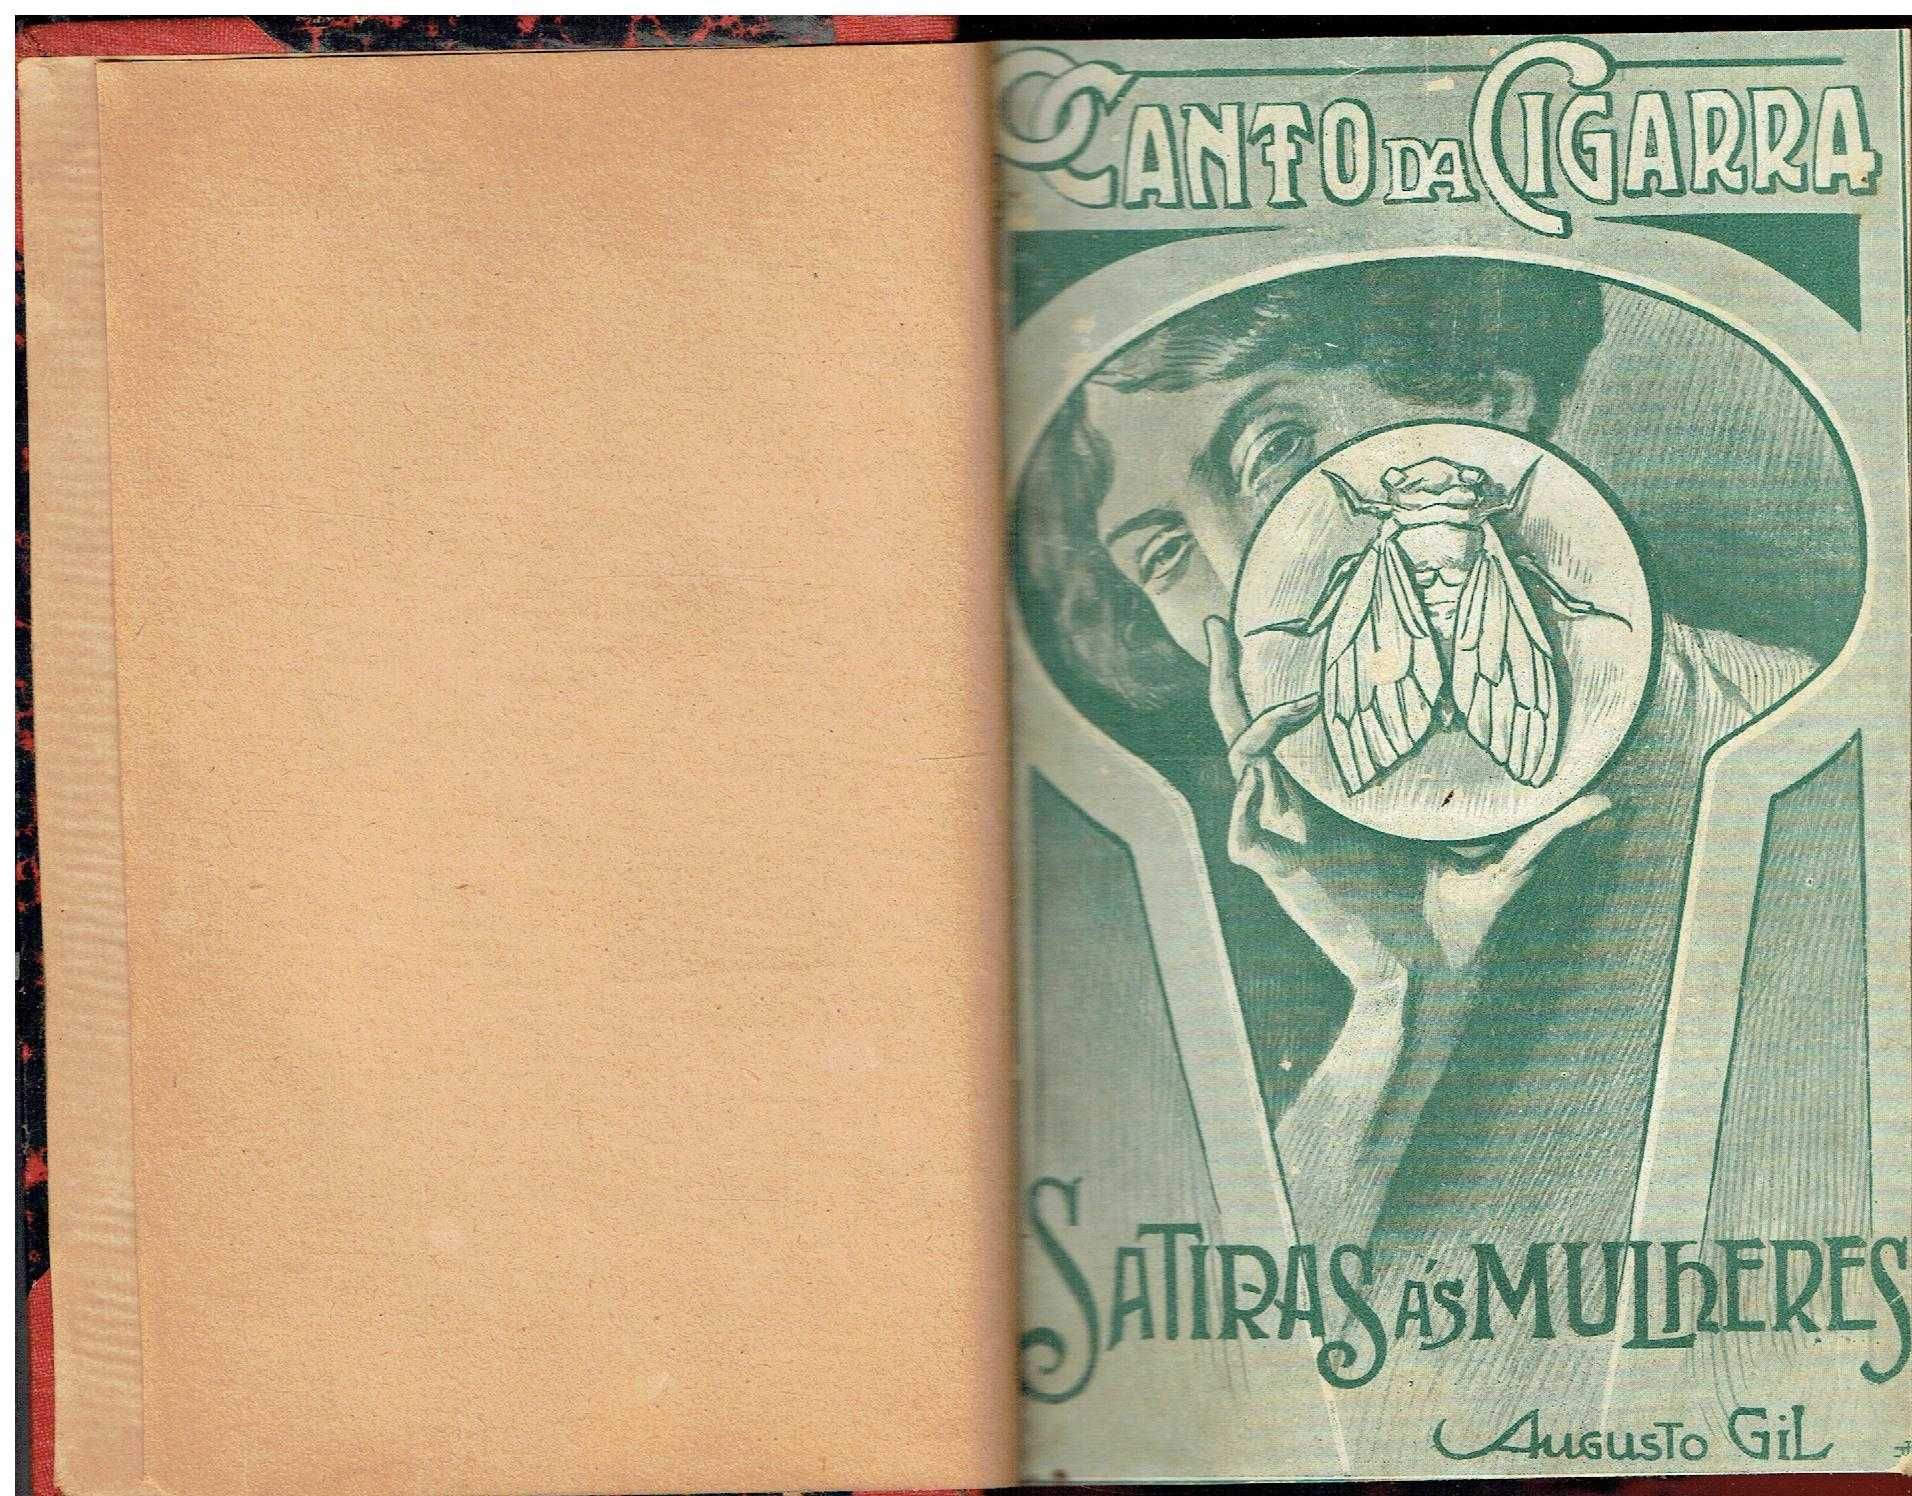 2570
	
O canto da cigarra : sátiras às mulheres  
de Augusto Gil.